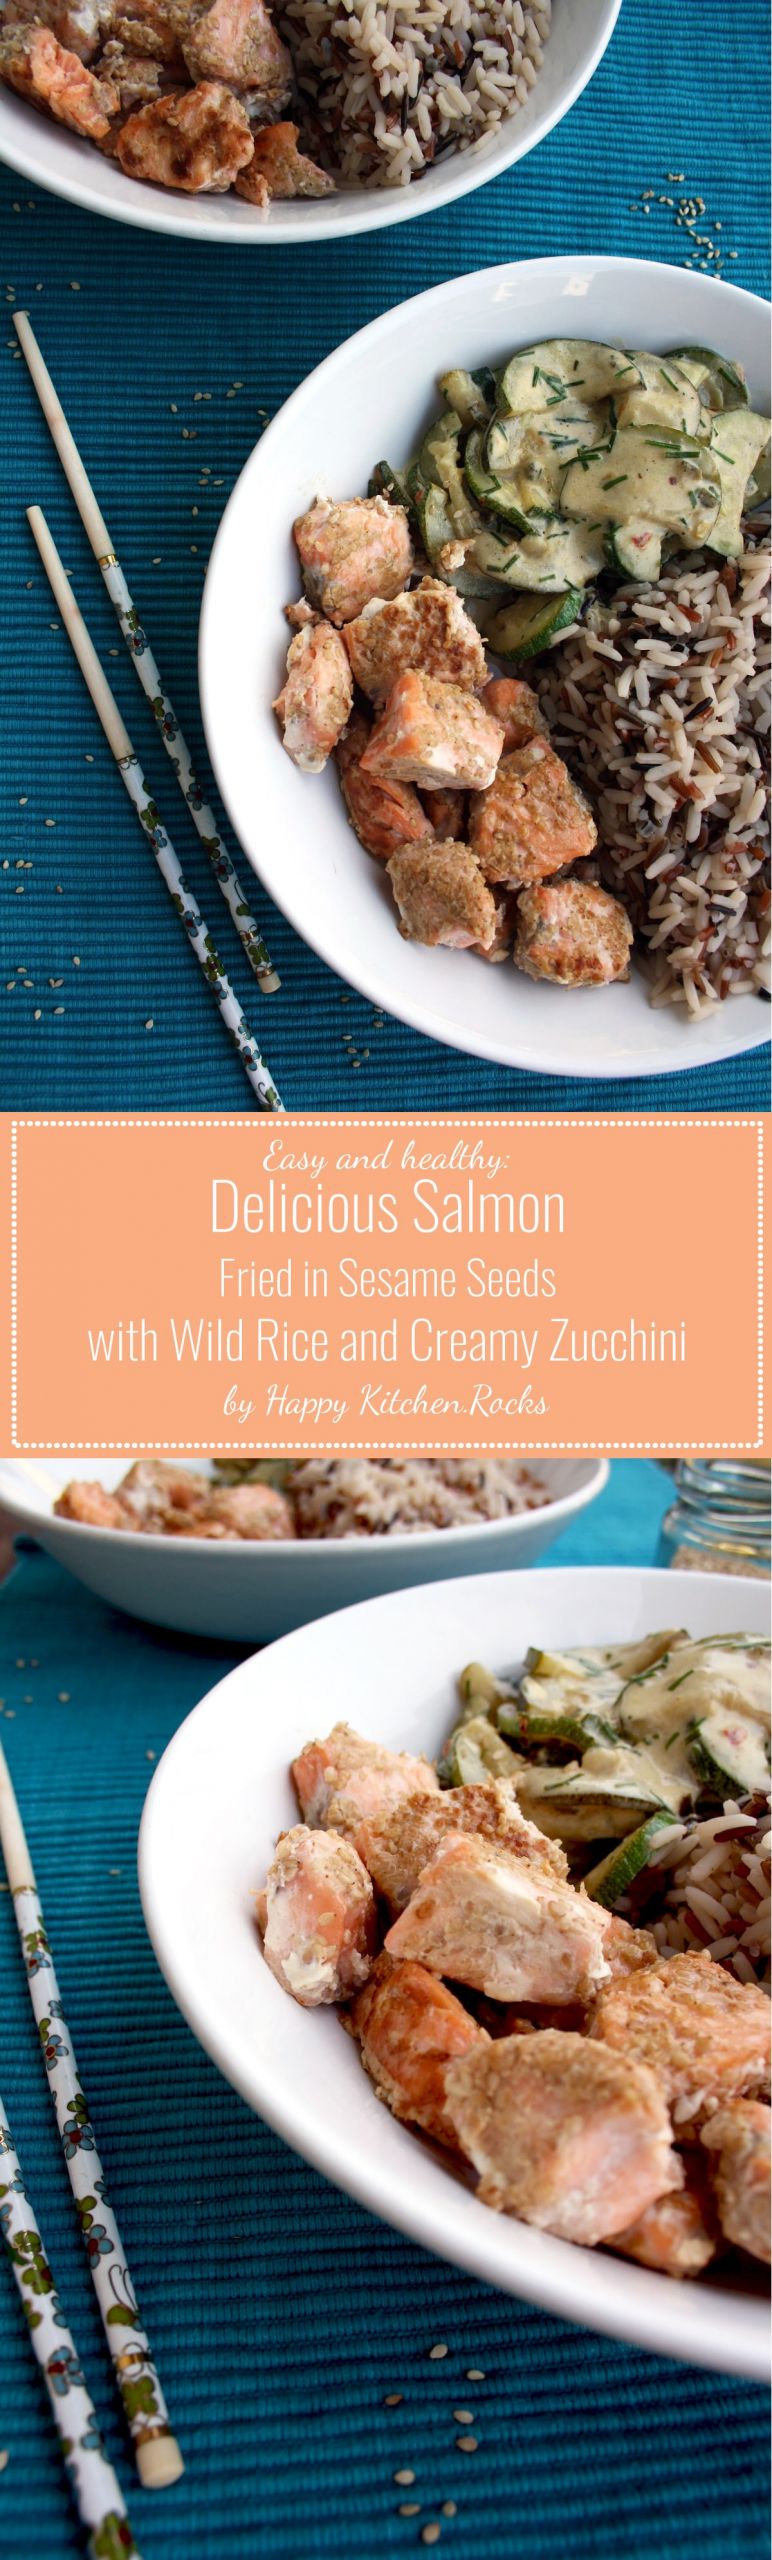 Salmon And Wild Rice
 Easy Sesame Salmon with Wild Rice and Creamy Zucchini